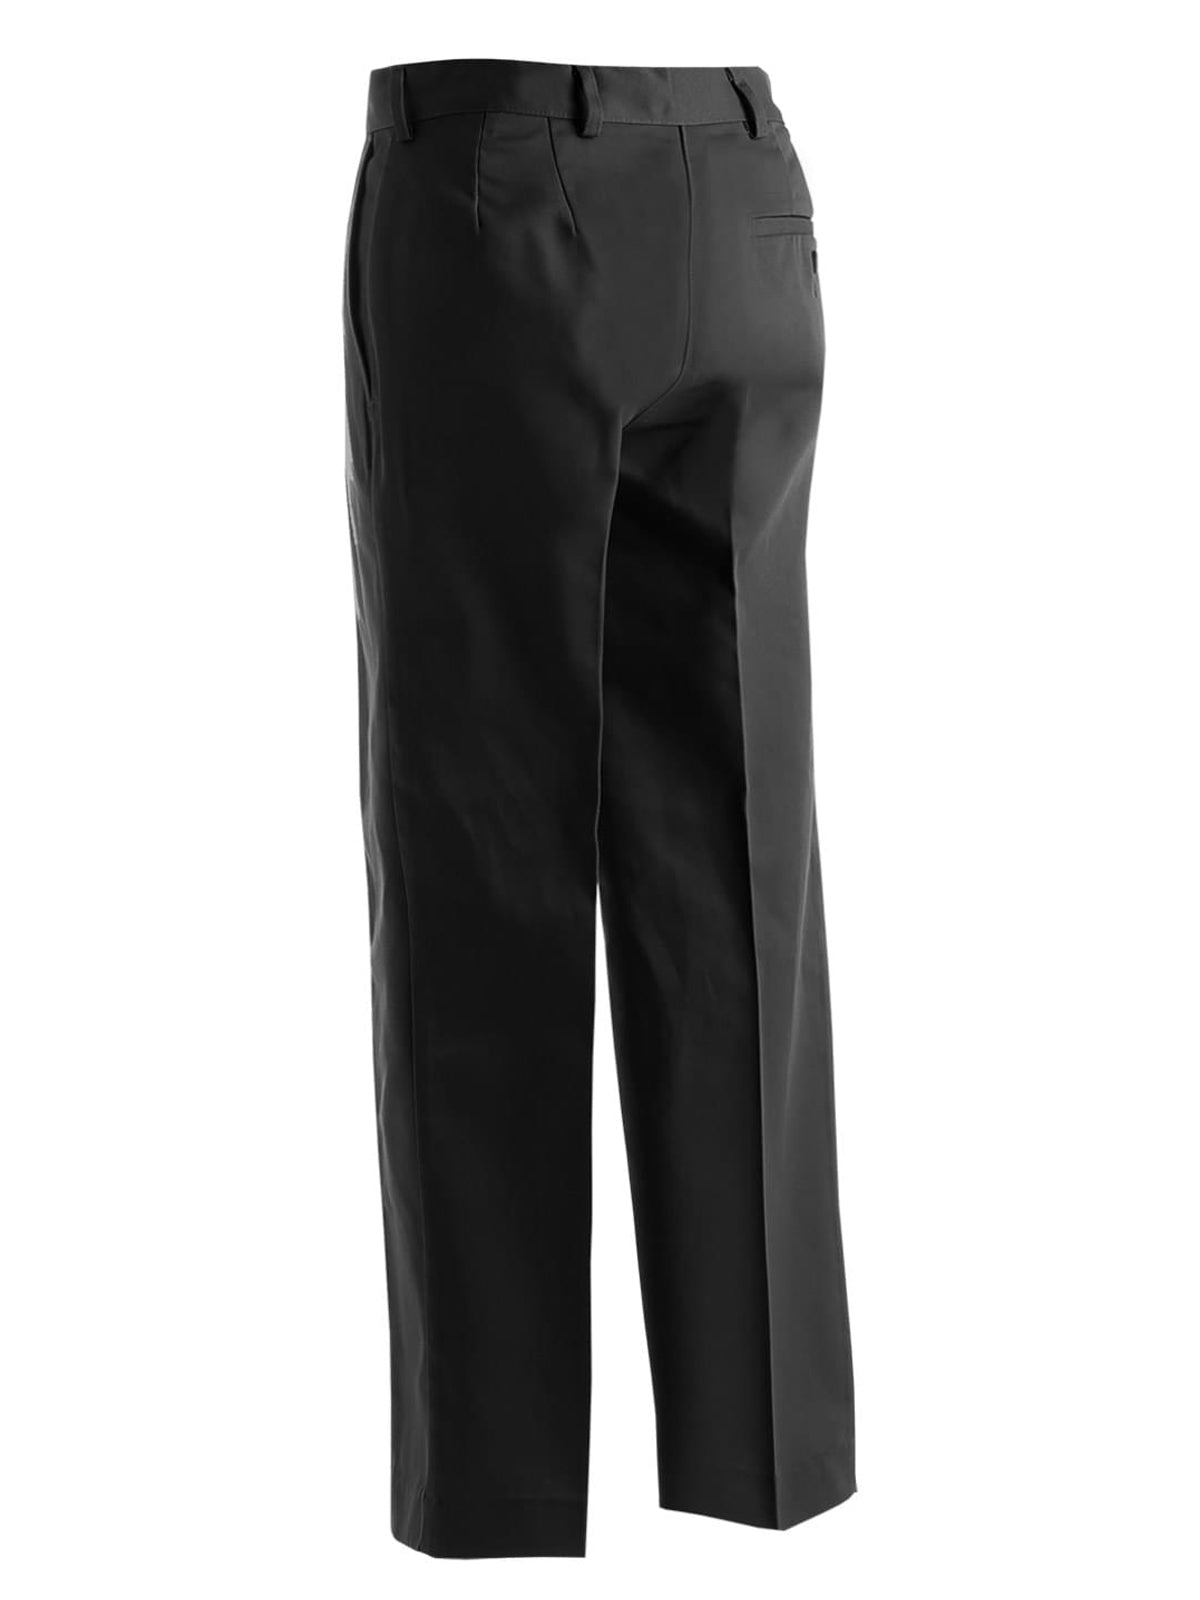 Women's Business Chino Flat Front Pant - 8576 - Black